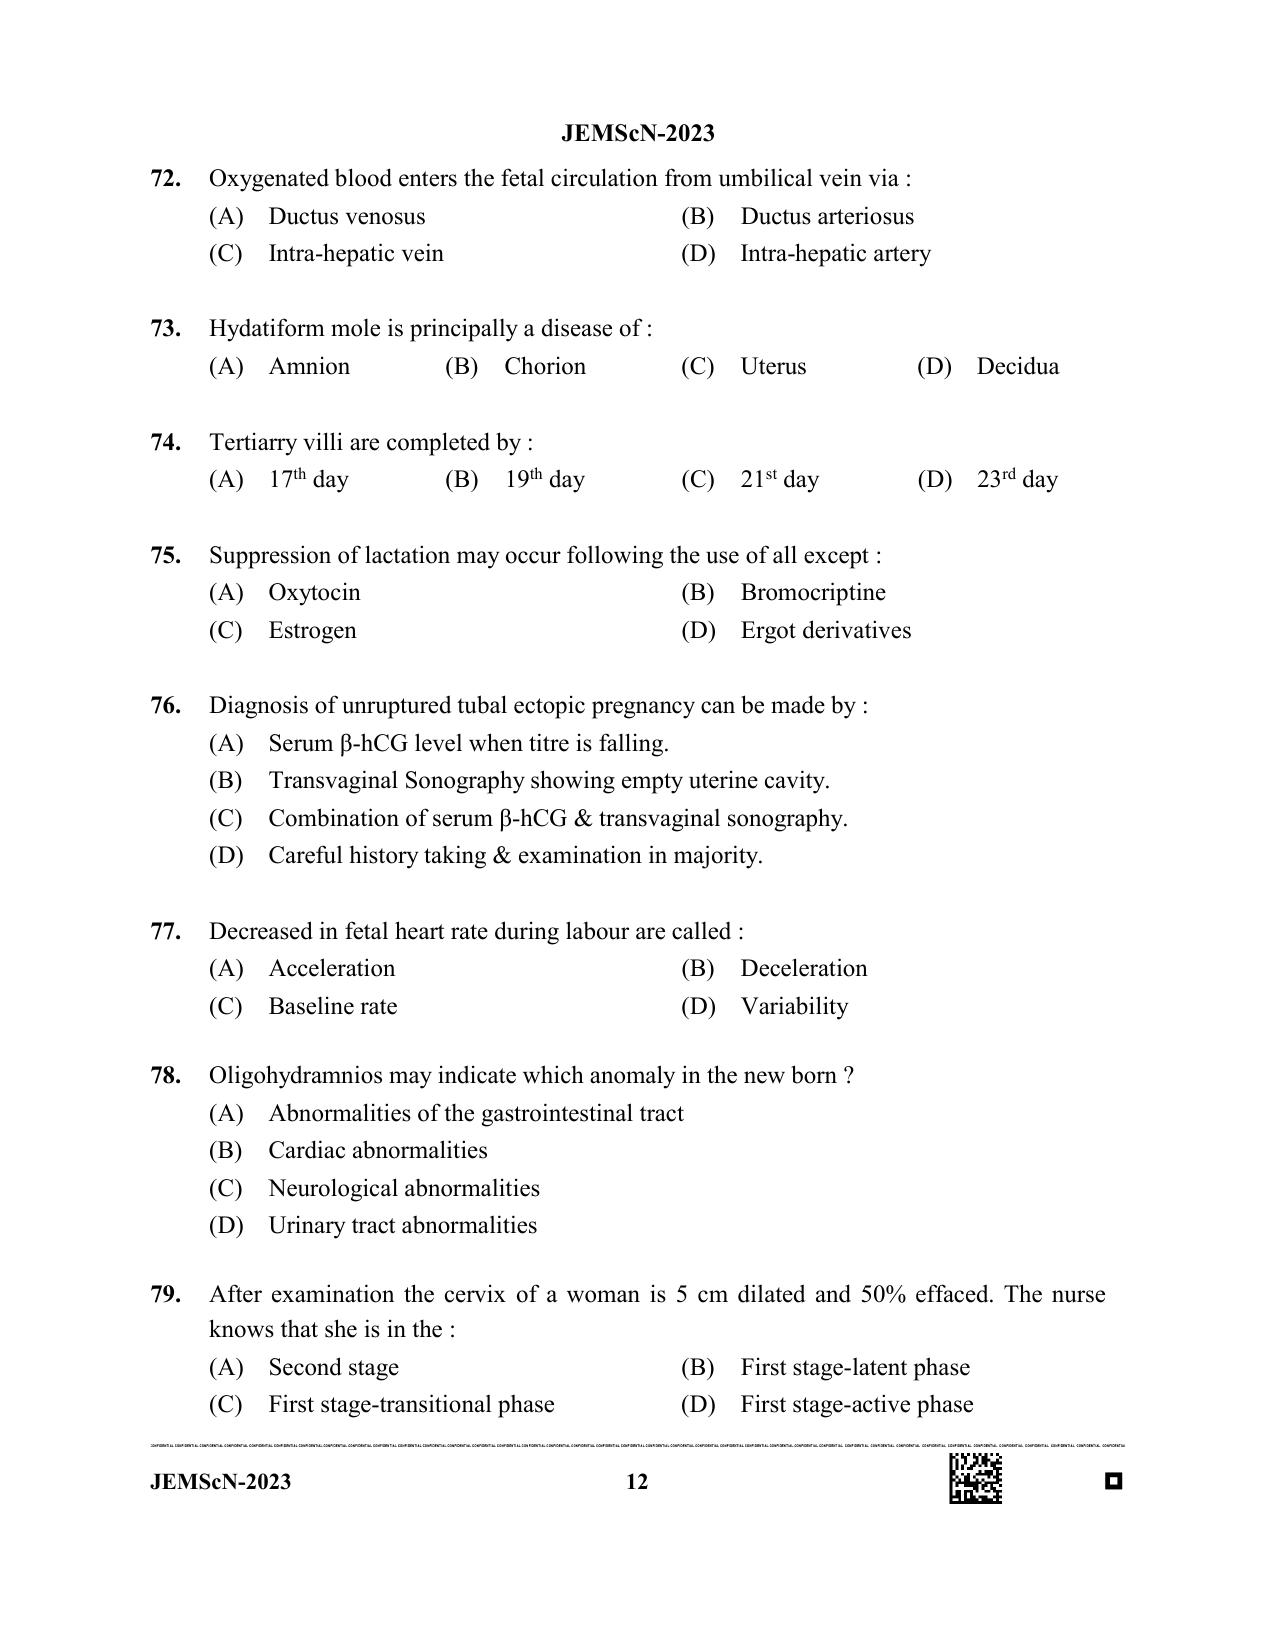 WB JEMScN 2023 Question Paper - Page 12